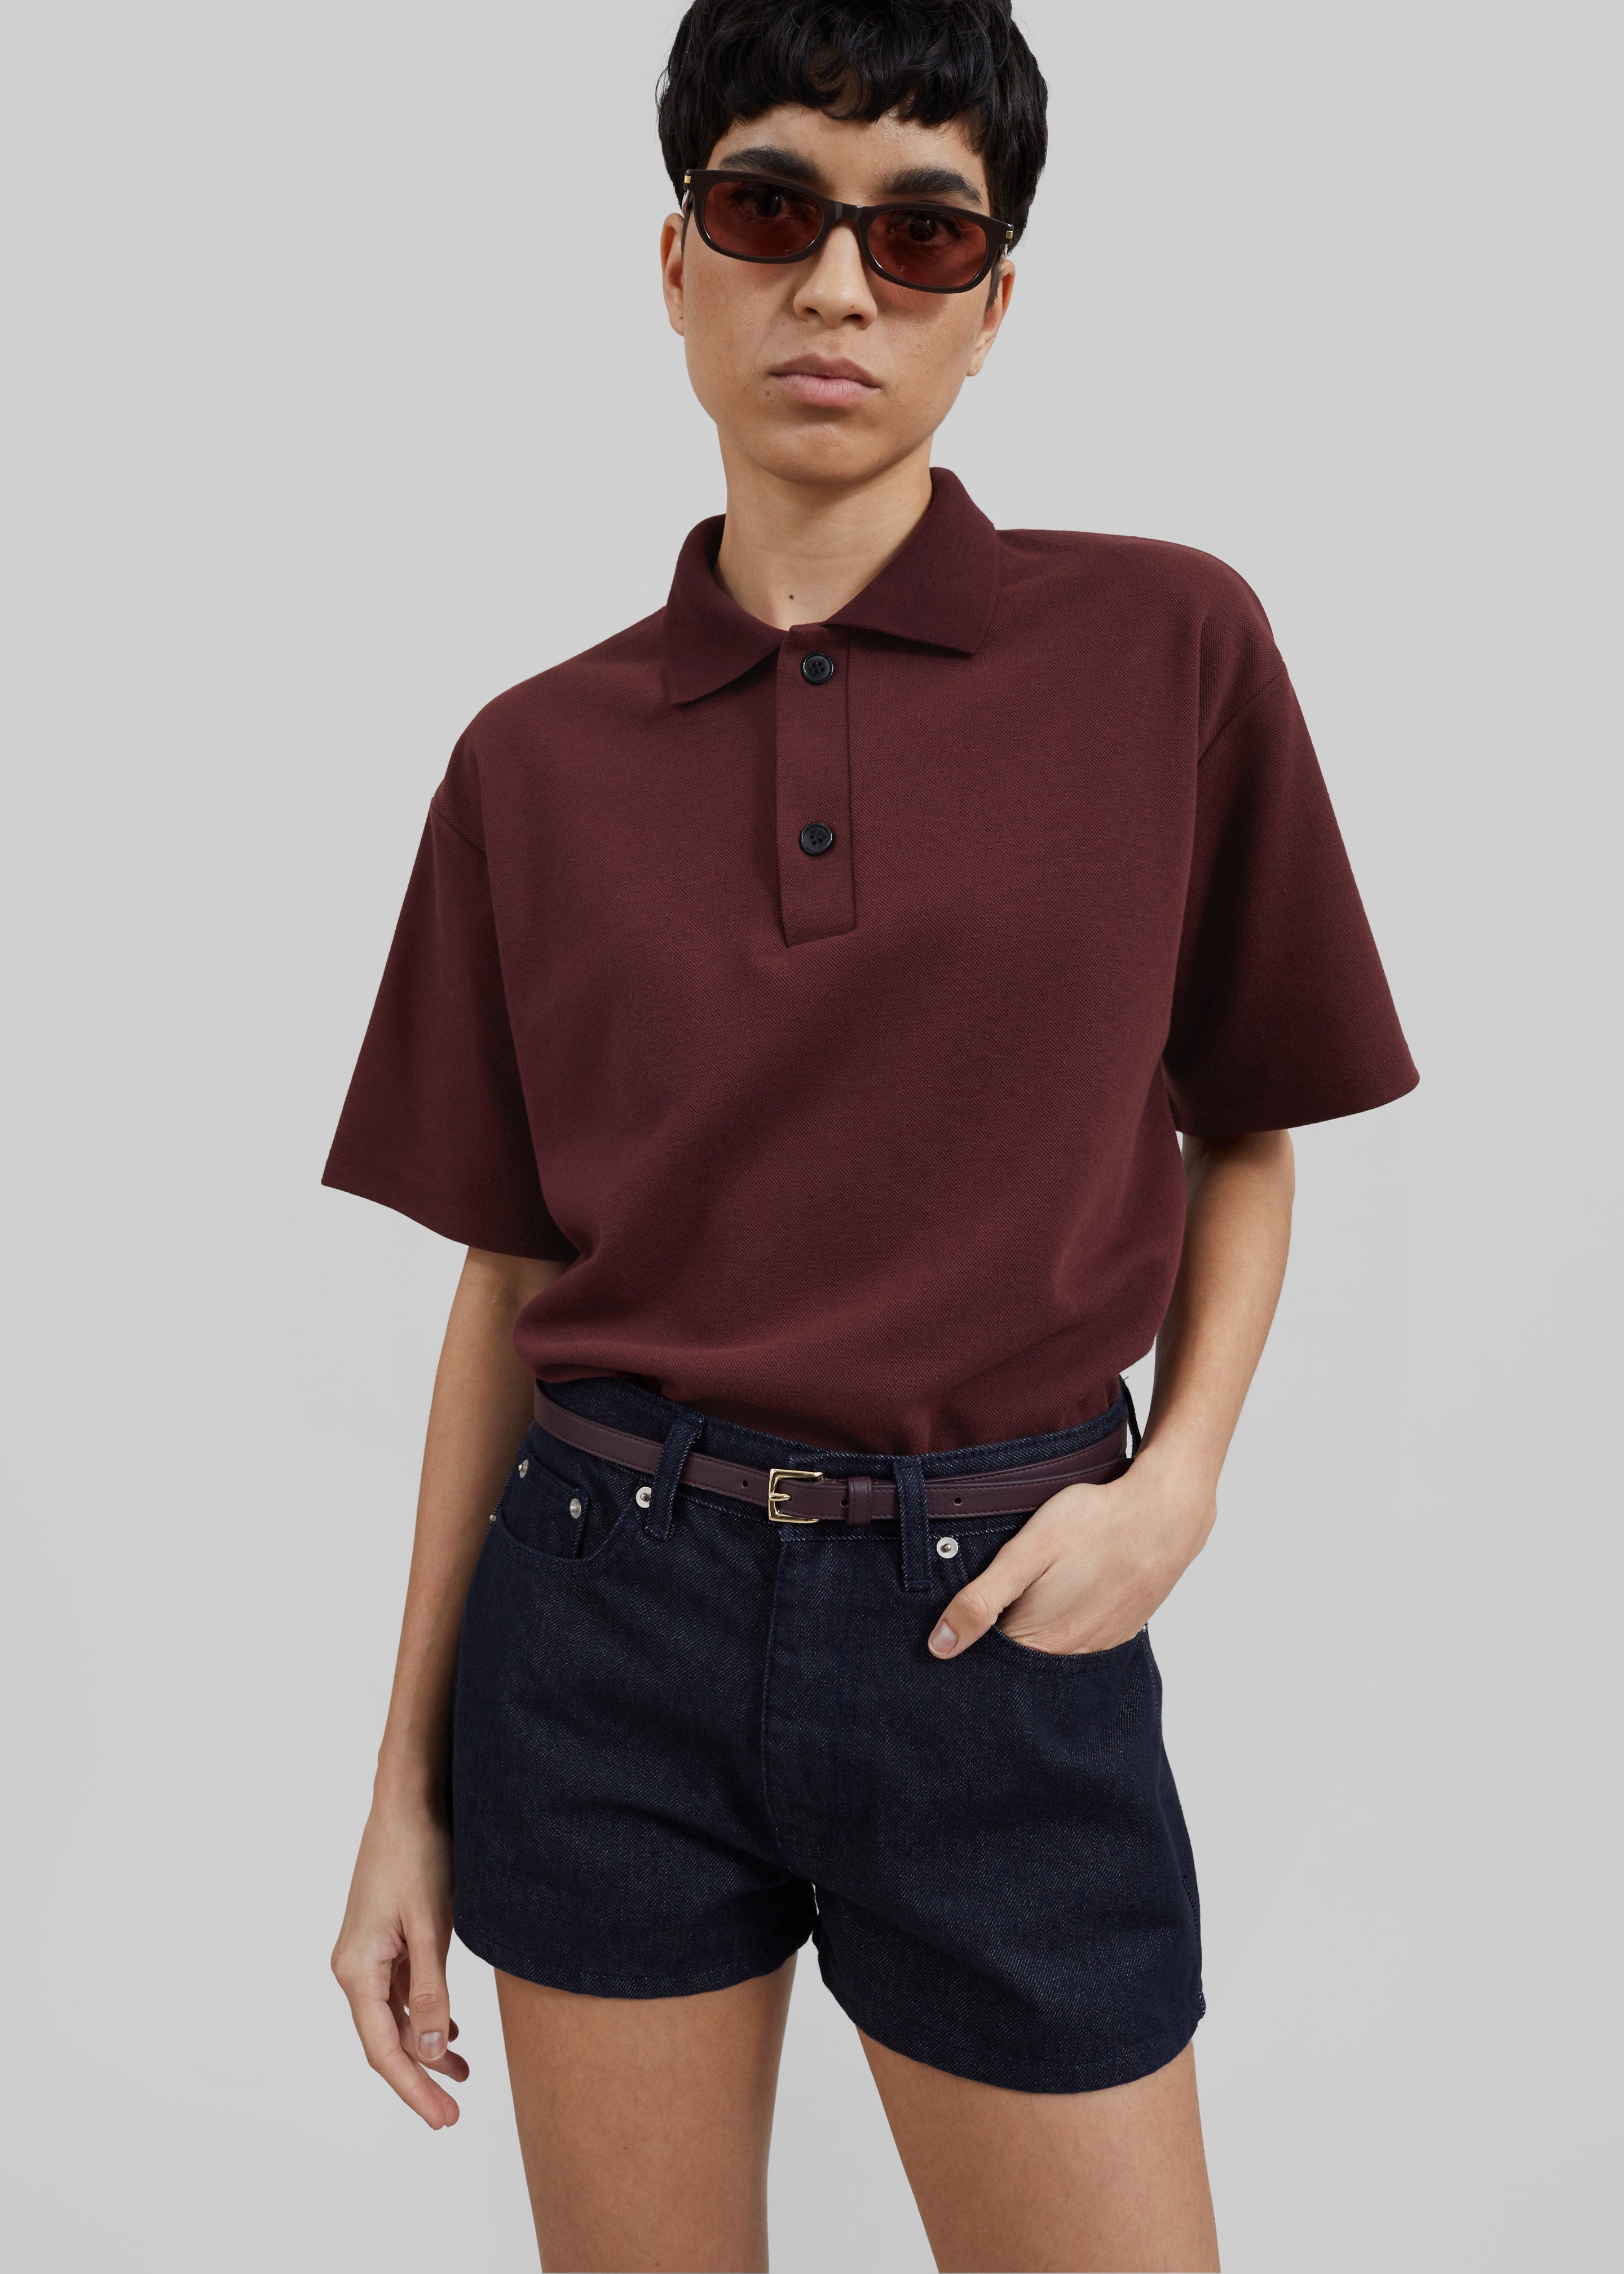 Dianne Polo Shirt - Burgundy - 2